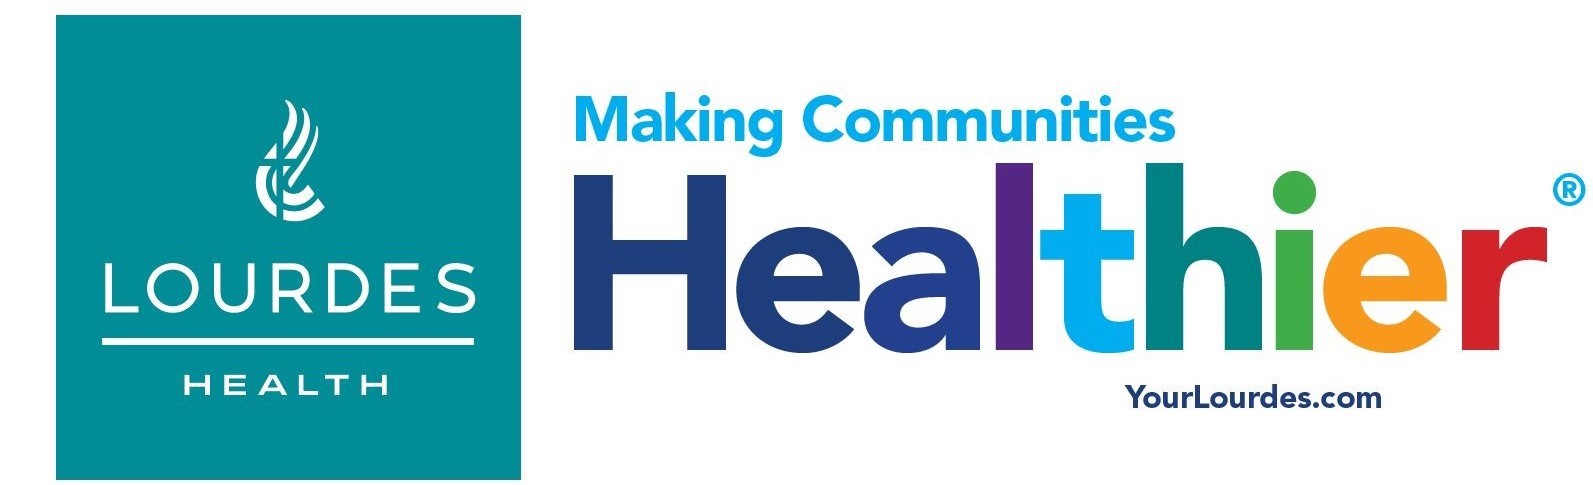 Making Communities Healthier